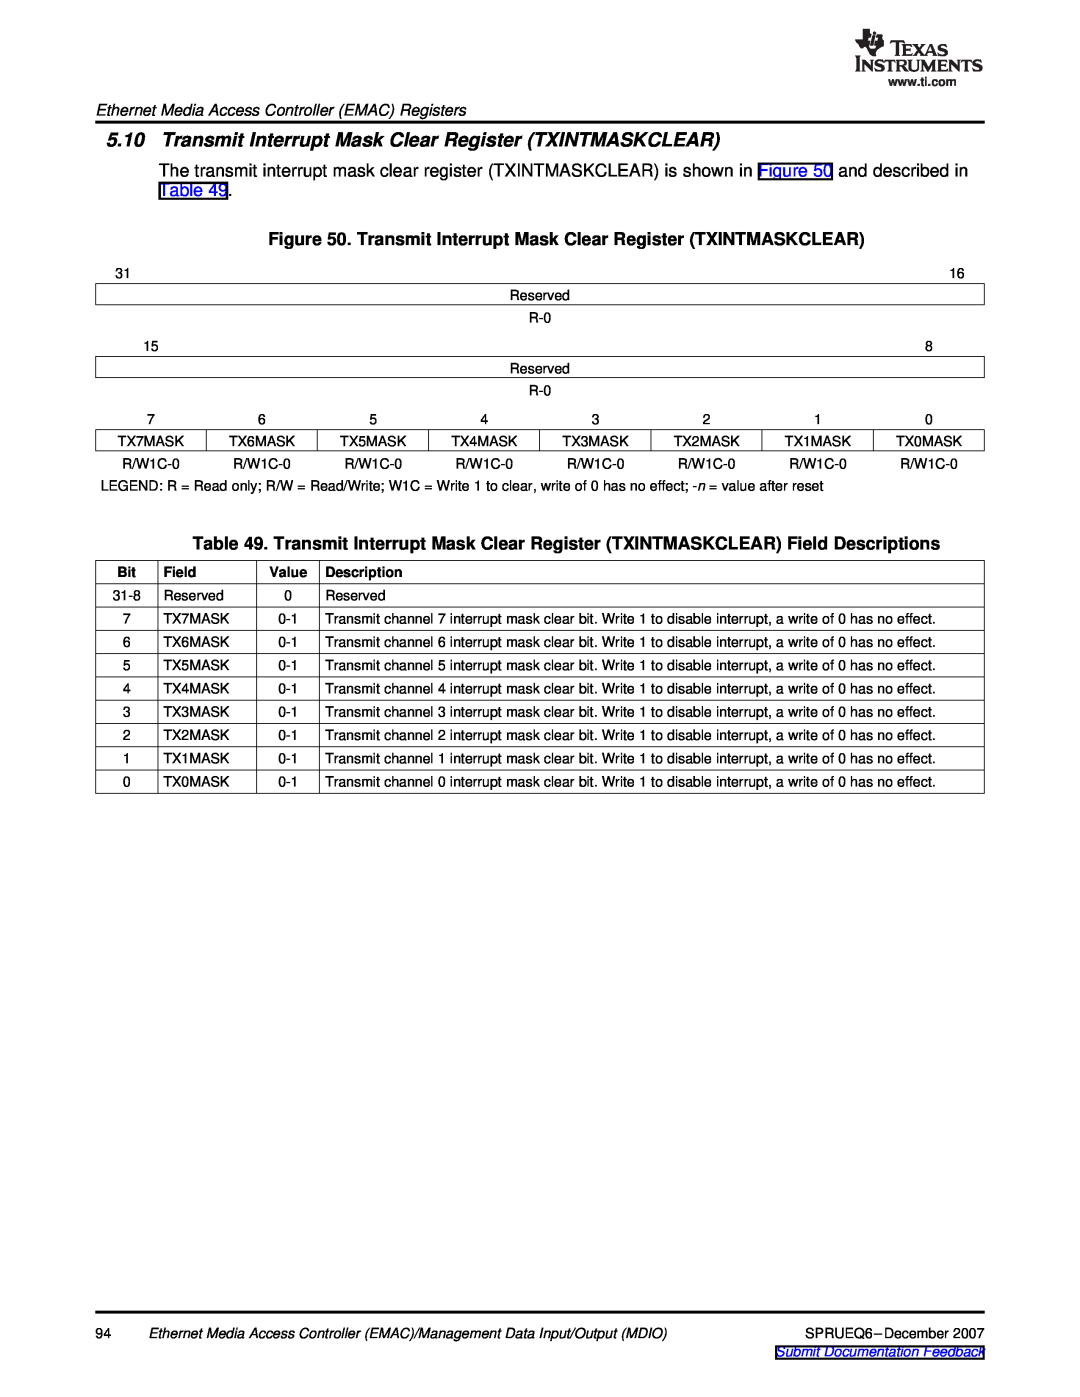 Texas Instruments TMS320DM646x manual Transmit Interrupt Mask Clear Register TXINTMASKCLEAR, Field, Value, Description 